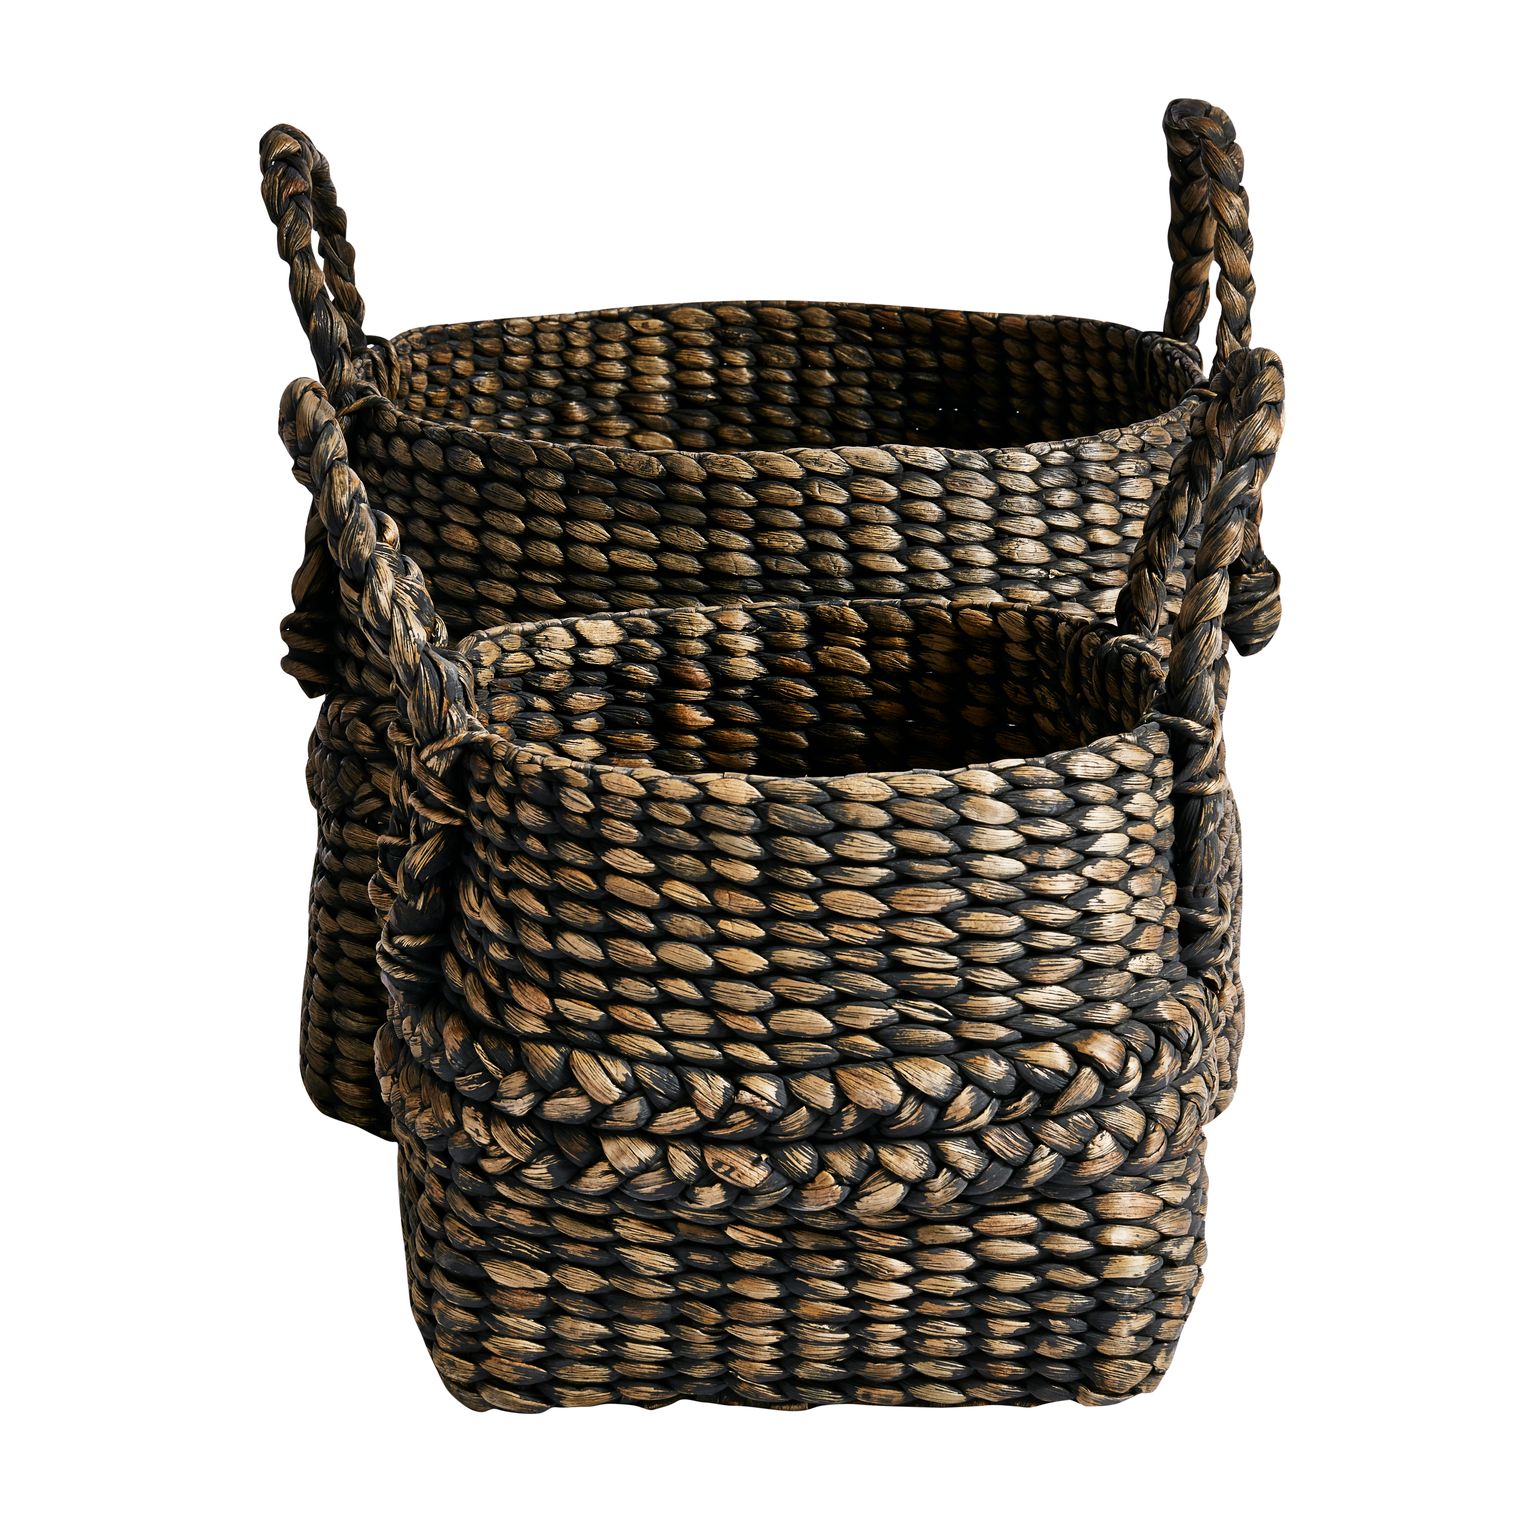 Small Hyacinth Basket with Handles - Black or Natural 